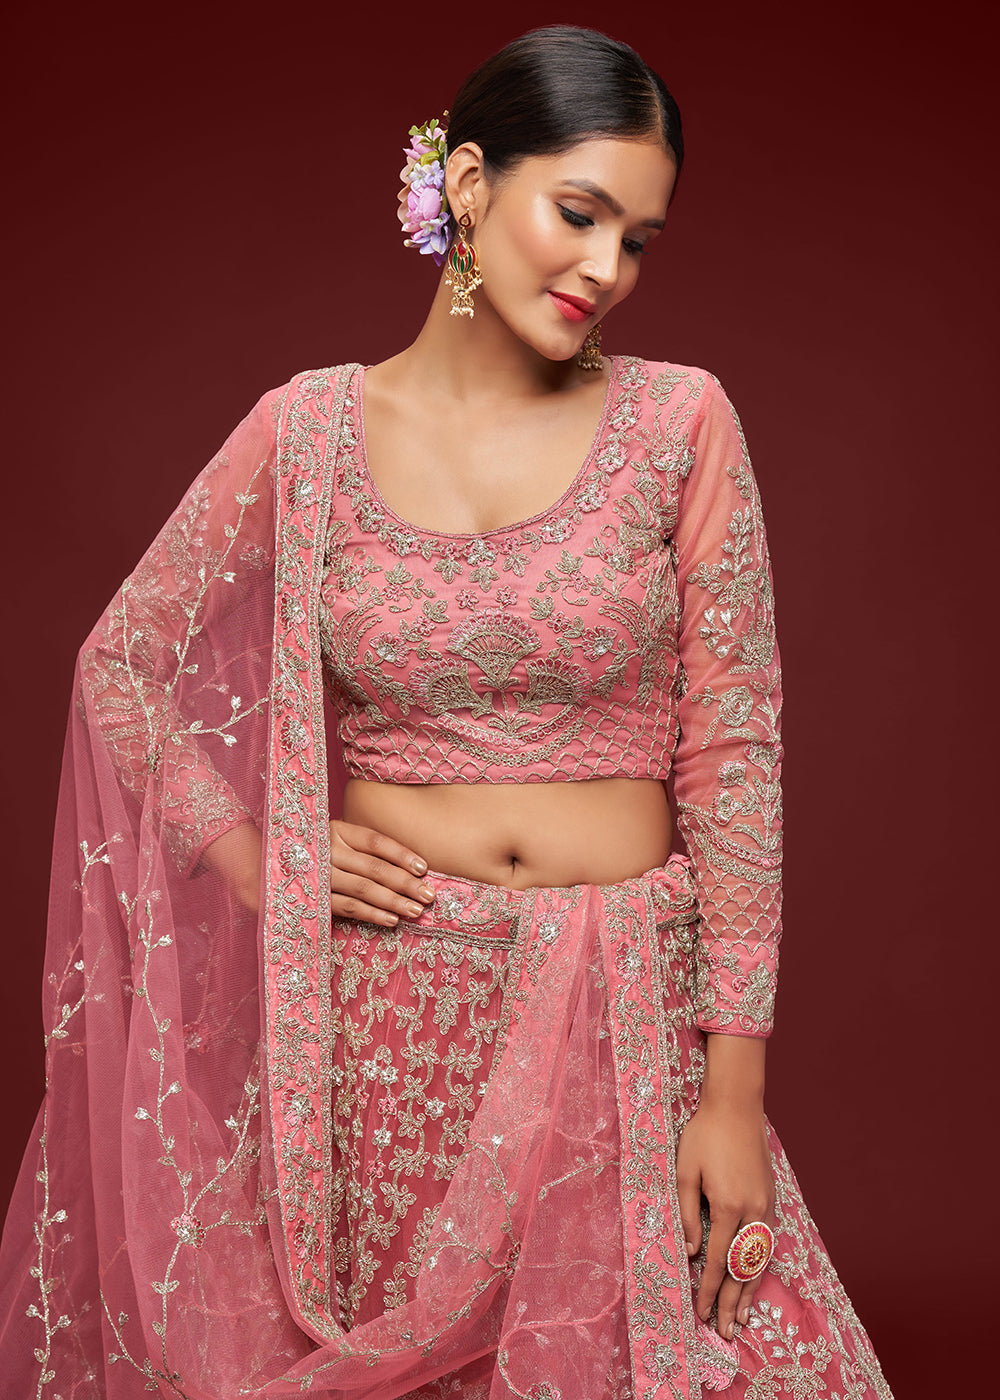 Buy Now Fantacy Rose Embroidered Soft Net Wedding Lehenga Choli Online in USA, UK, Canada & Worldwide at Empress Clothing. 